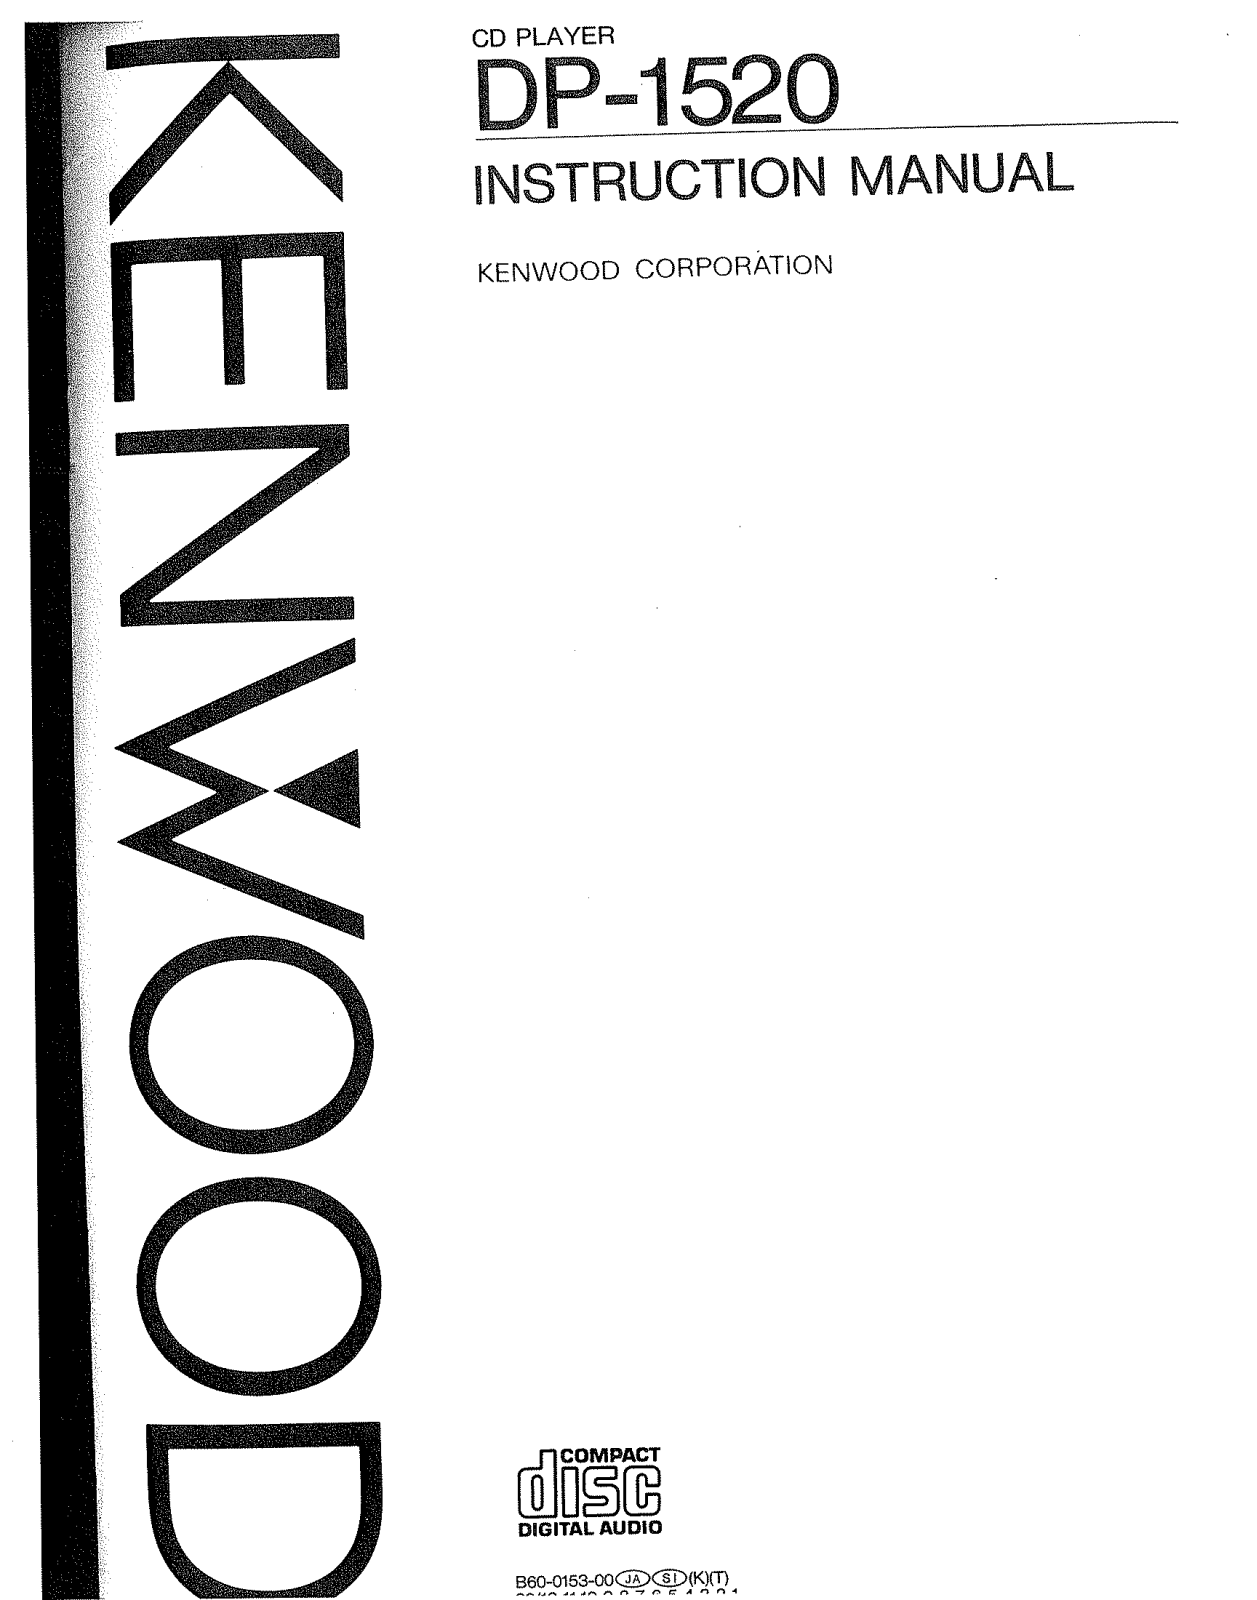 Kenwood DP-1520 Owner's Manual